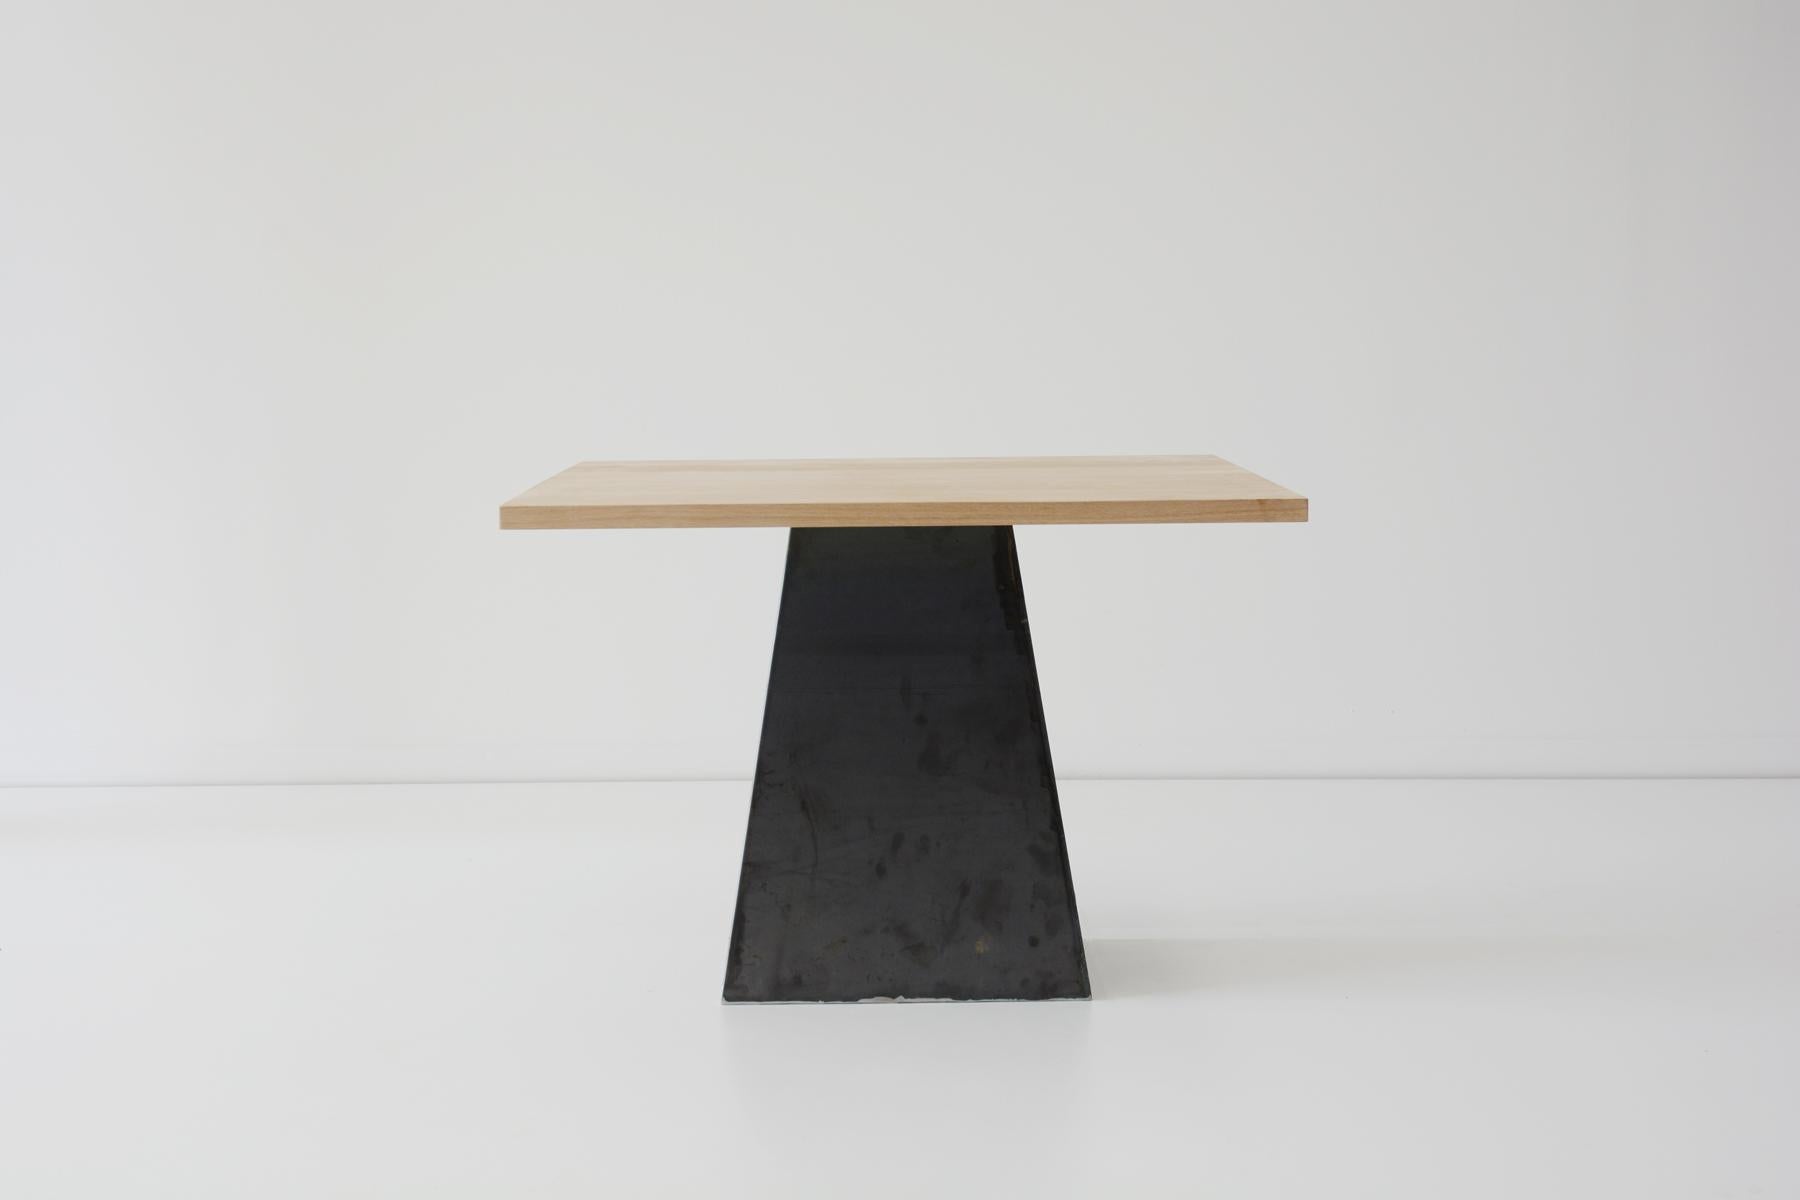 Oak large Brackton dining table by Hollis & Morris
Dimensions: 102